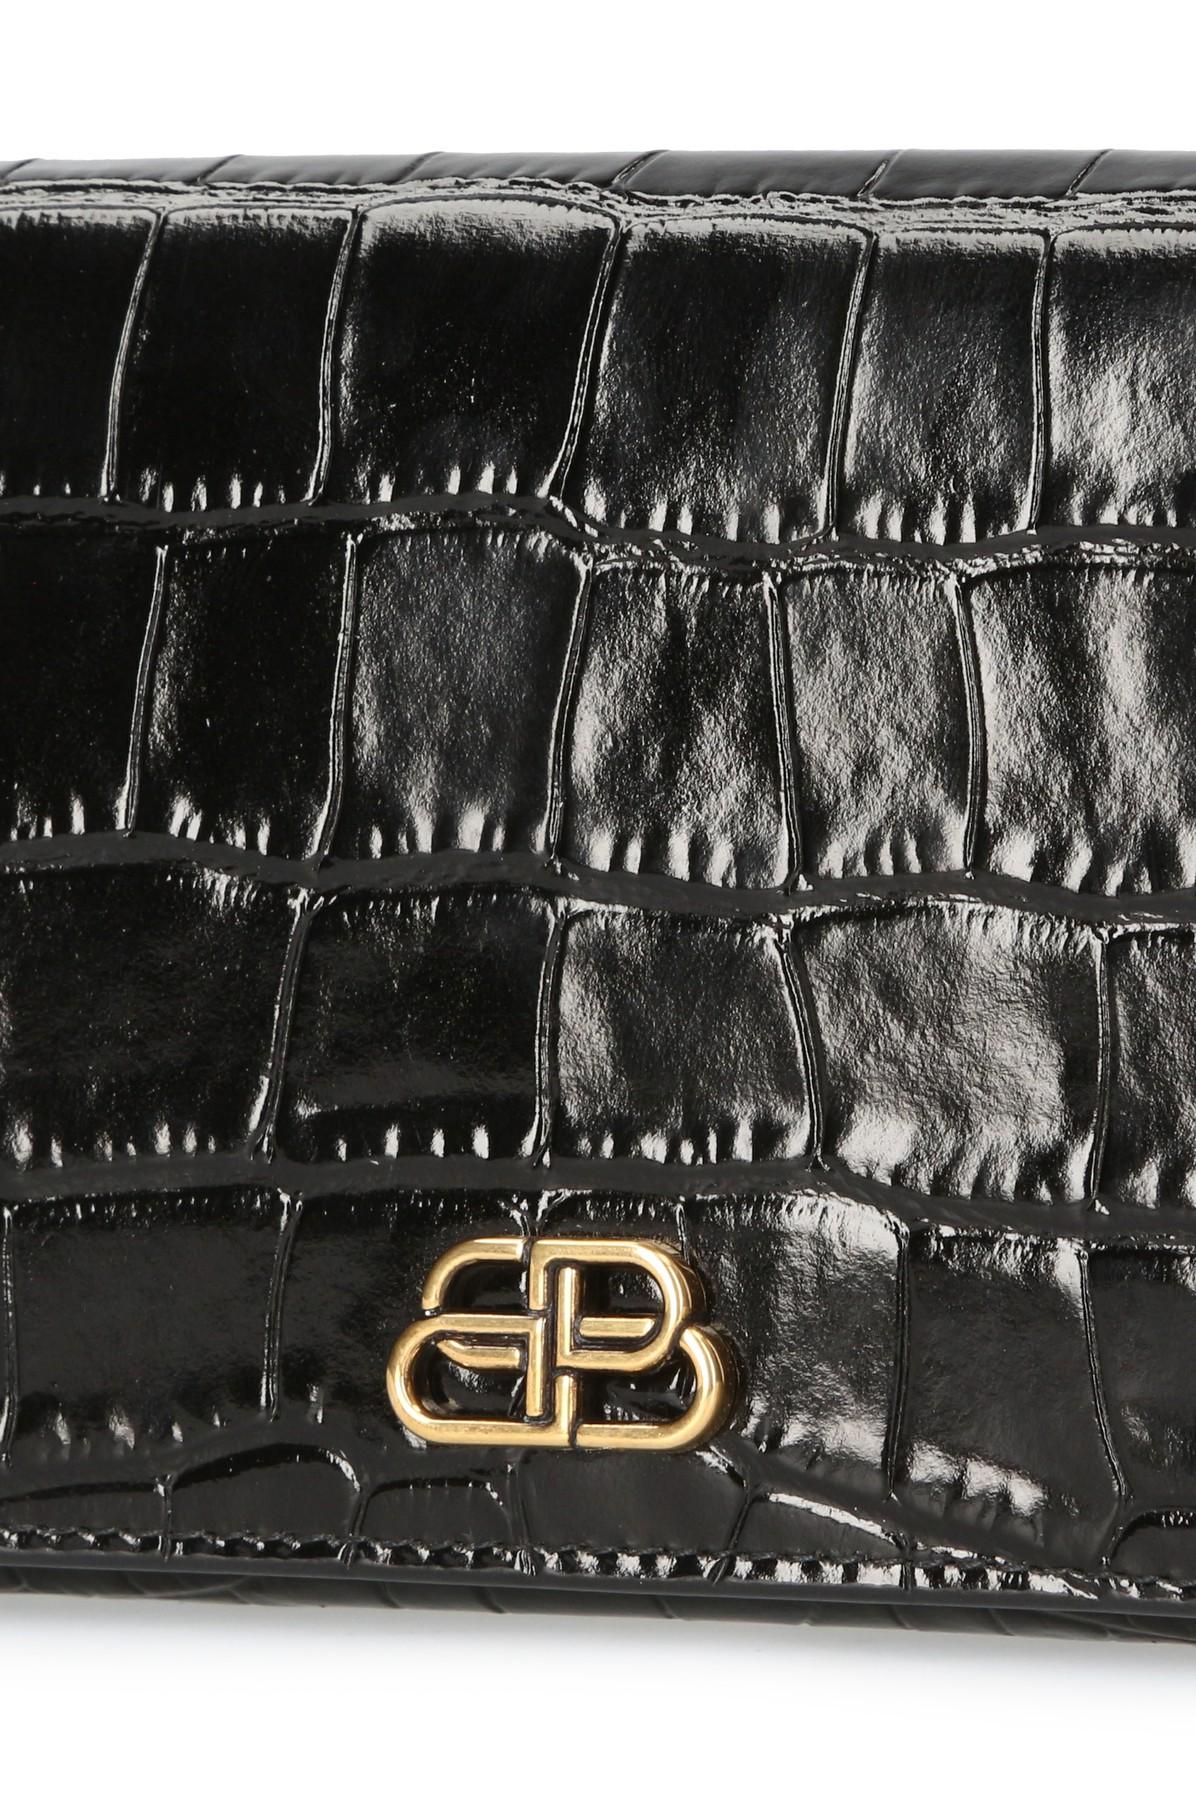 Balenciaga Bb Phone Holder With Chain in Black - Lyst